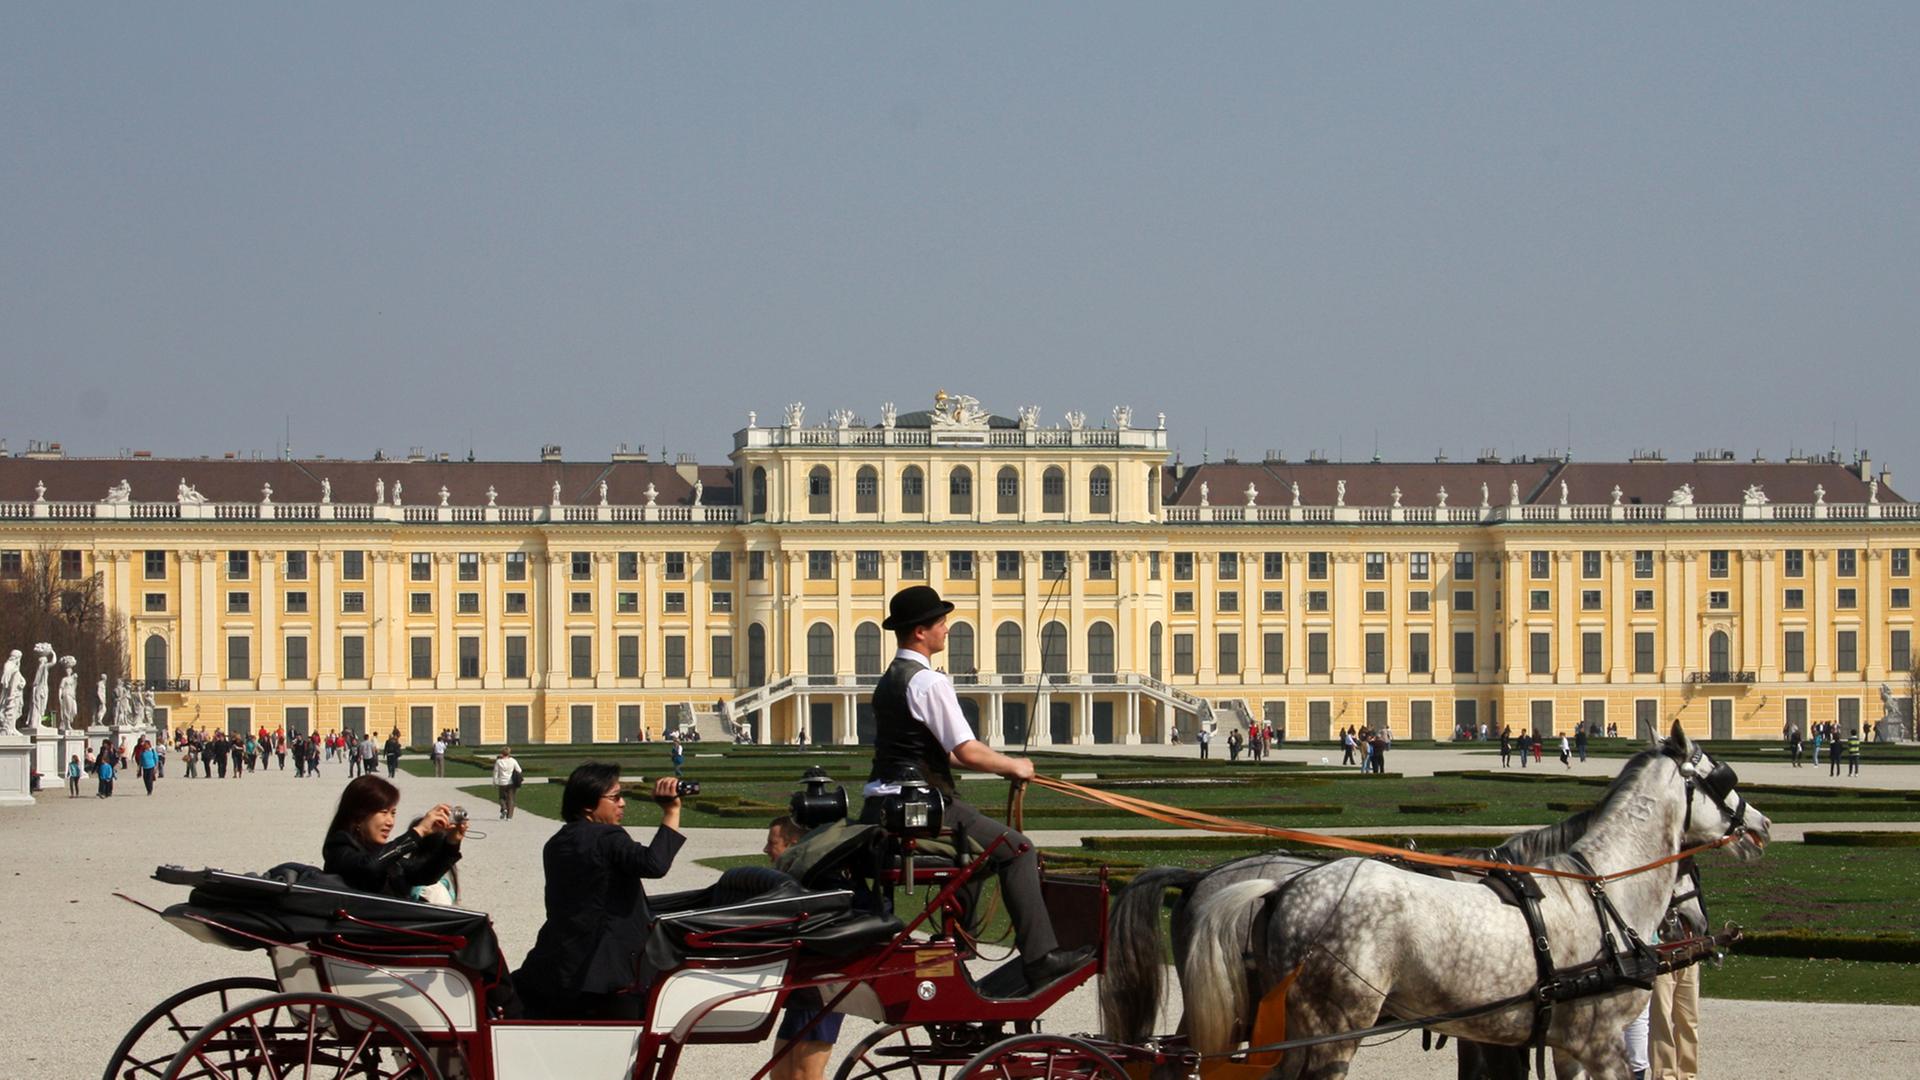 Ein Fiaker vor Schloss Schönbrunn